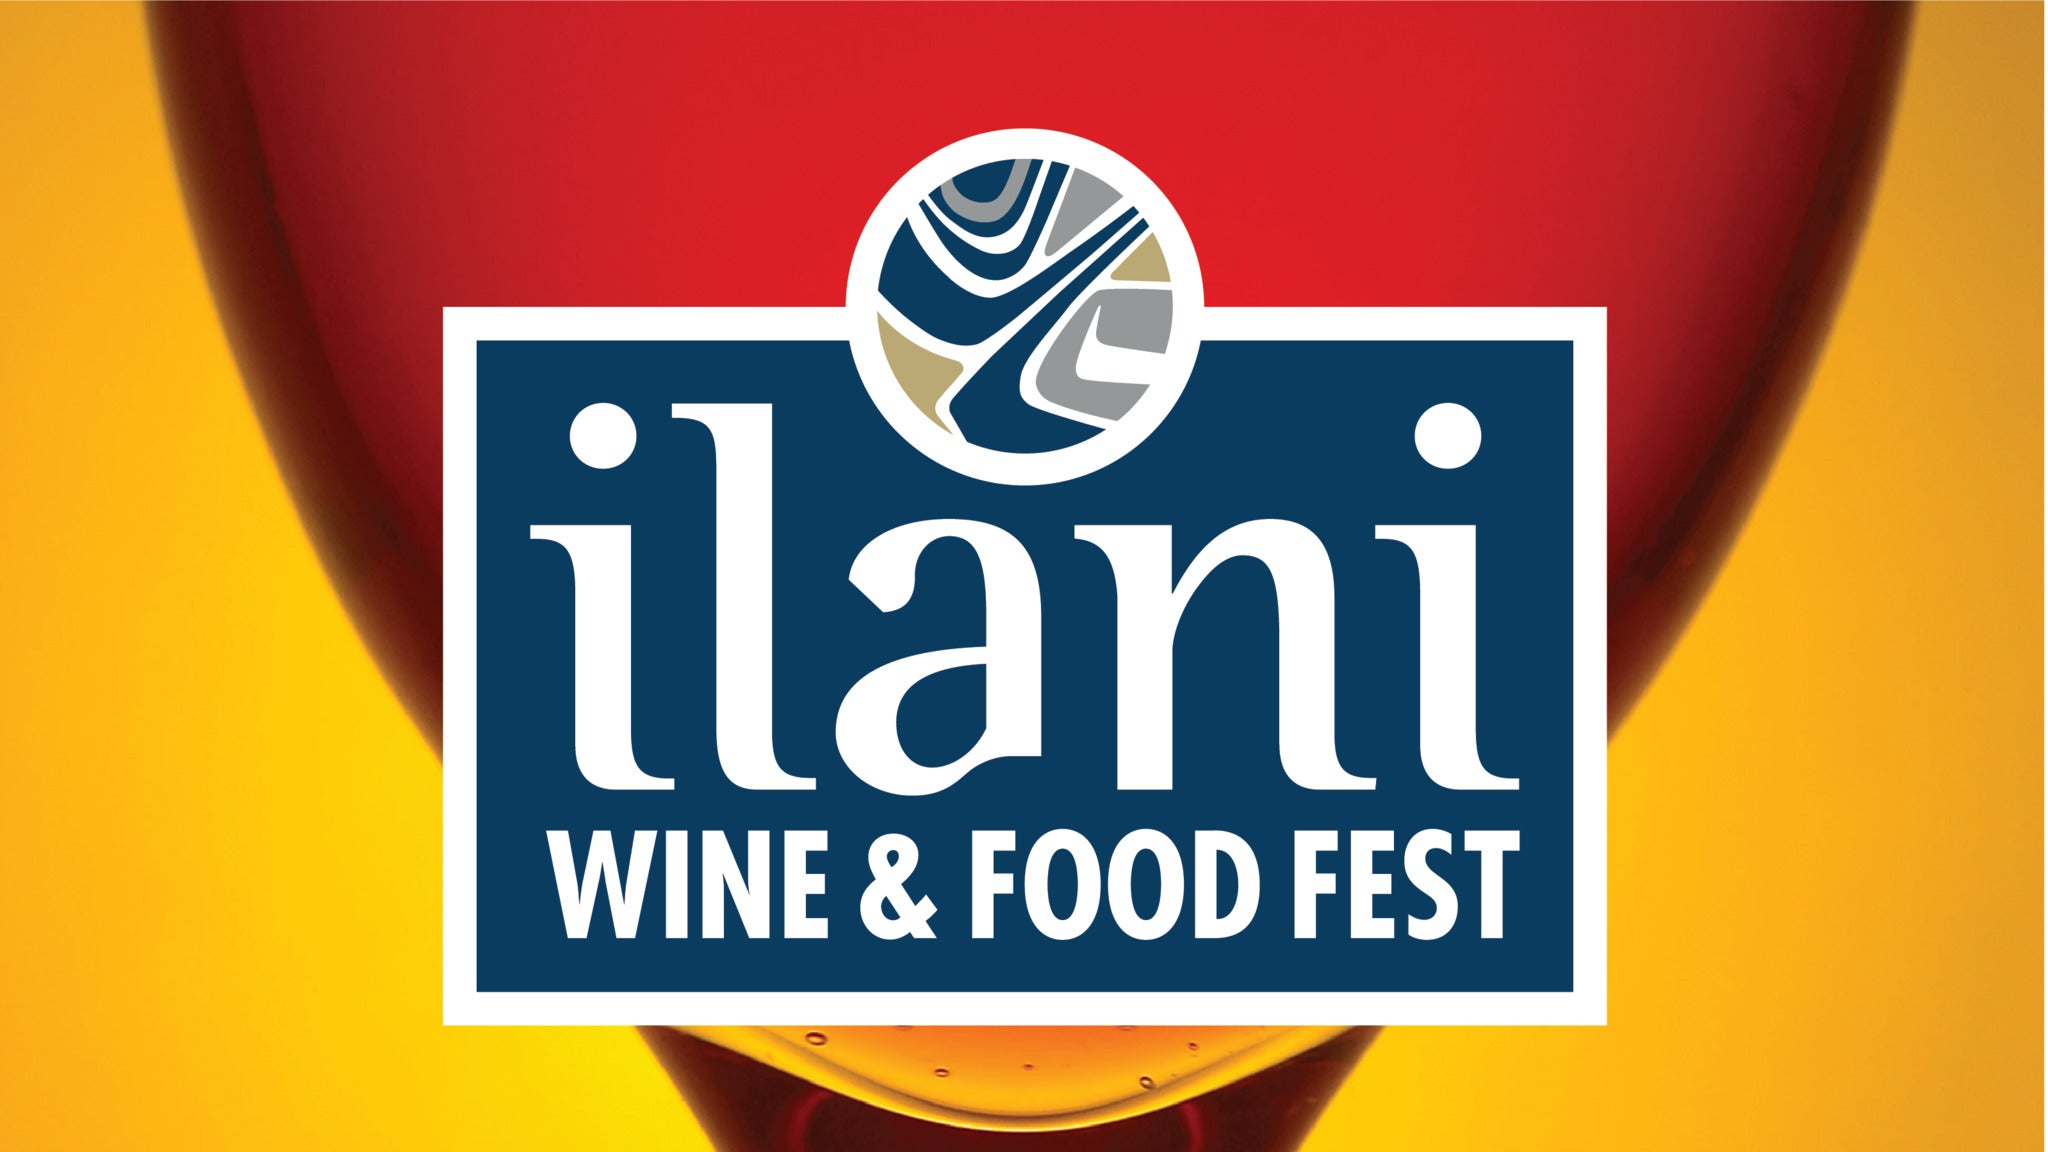 ilani Wine & Food Fest Weekend Grand Tasting Pass in Ridgefield promo photo for Standard presale offer code